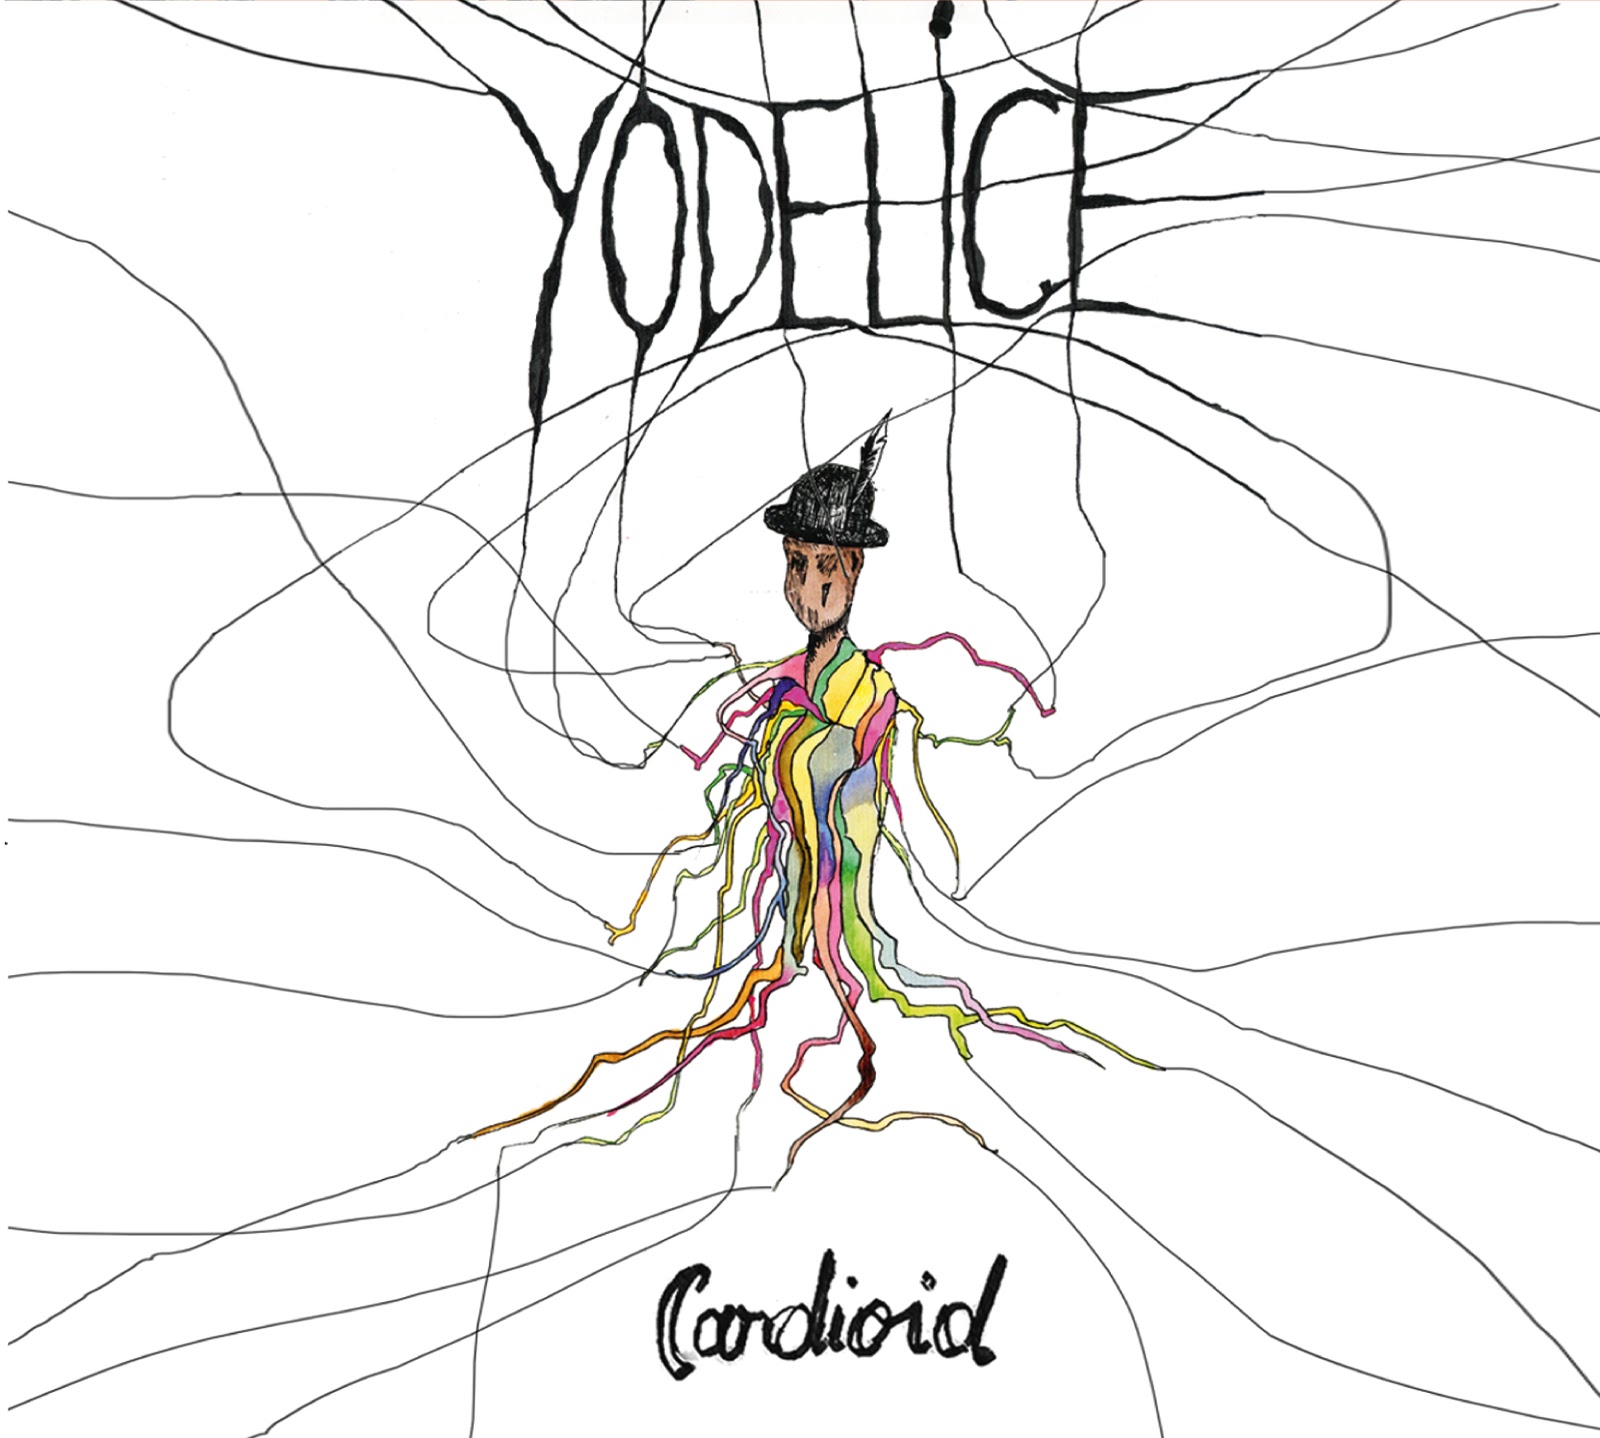 Yodelice_Cardioid